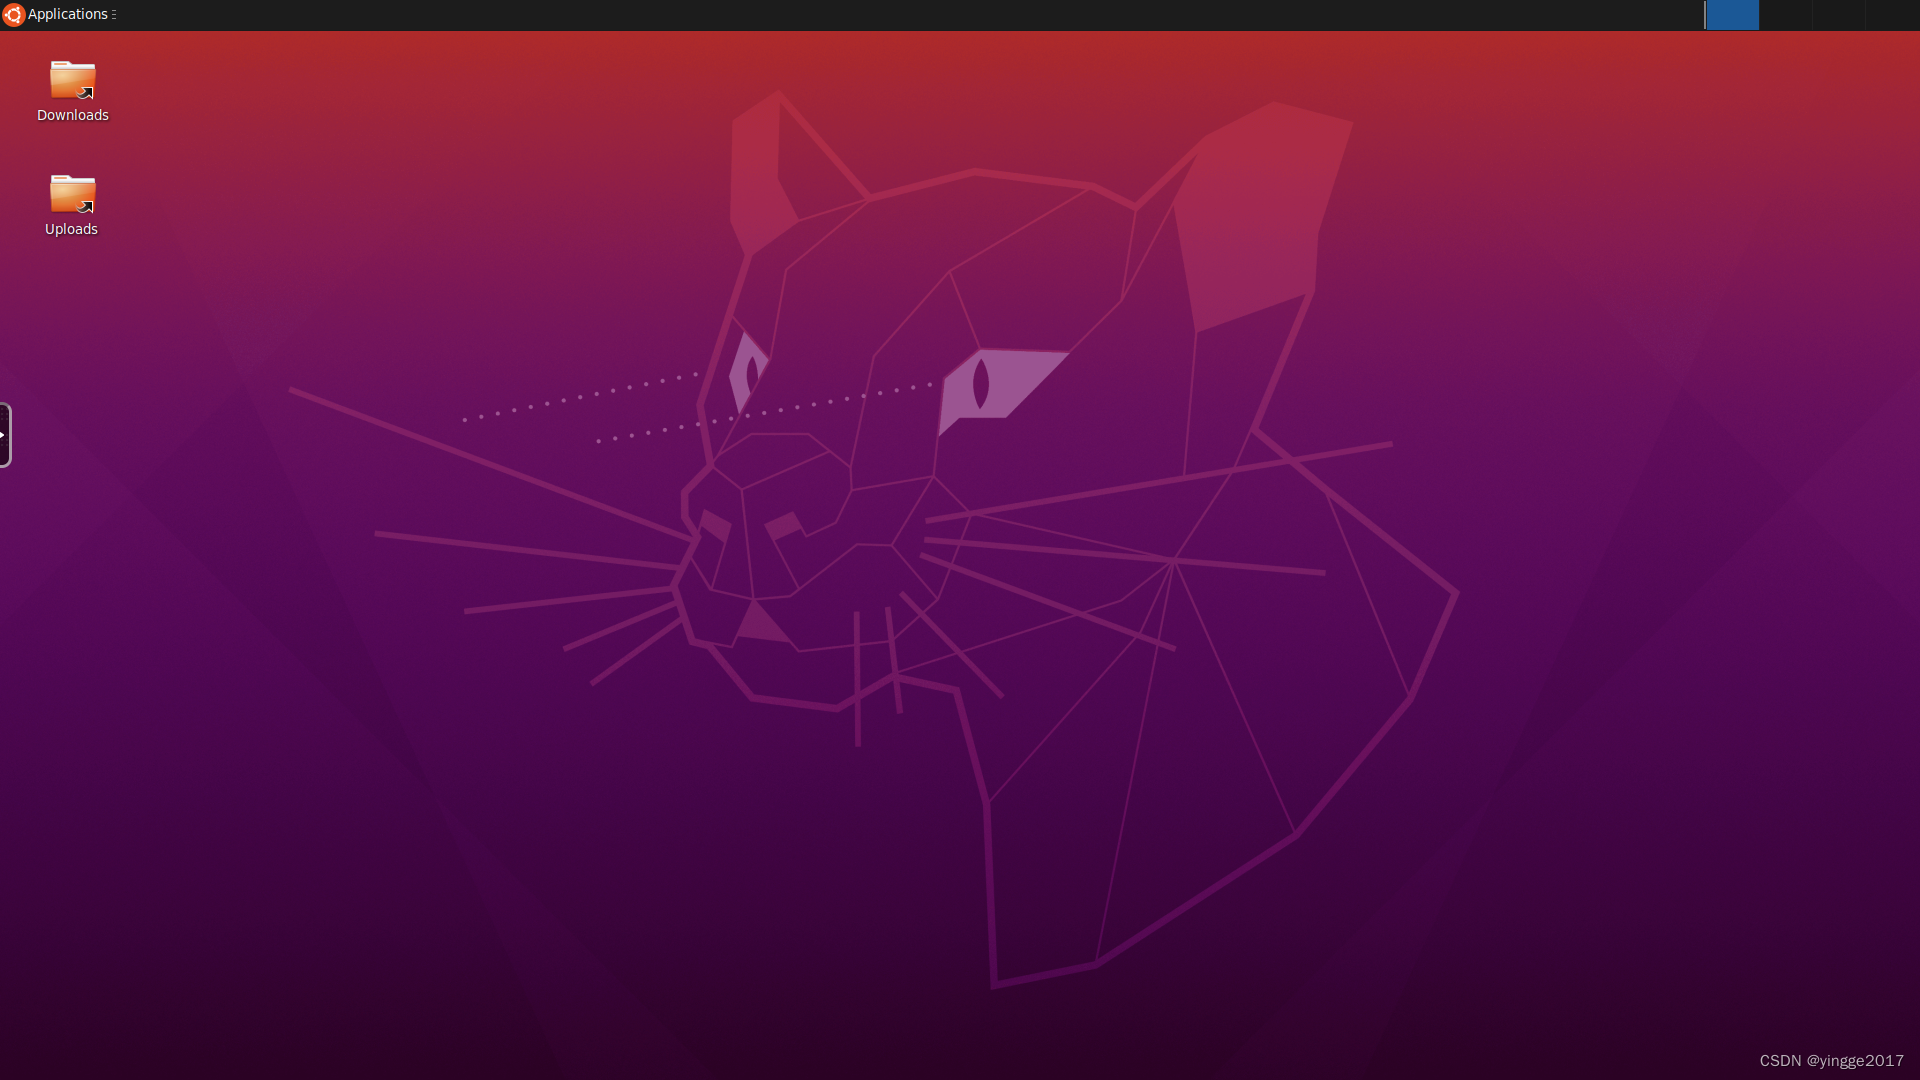 docker中安装Ubuntu20，浏览器访问其图形界面